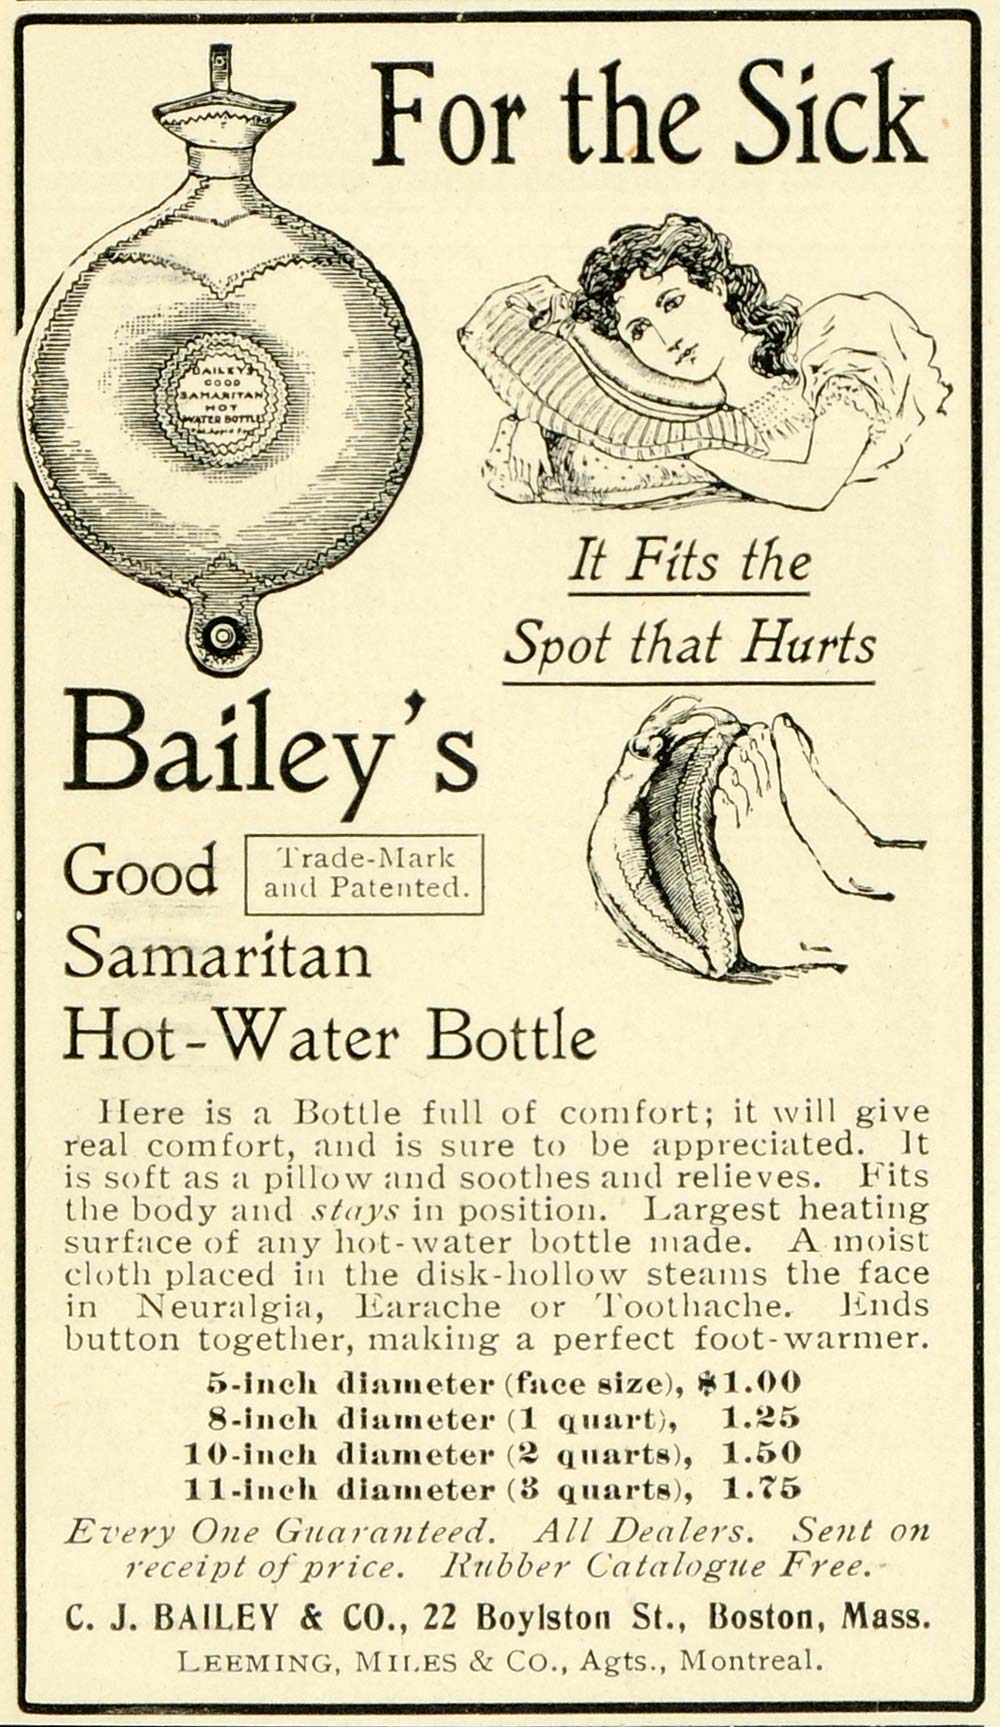 1902 Ad C. J. Bailey's Good Samaritan Hot Pack Water Bottle Achy Sore LHJ6